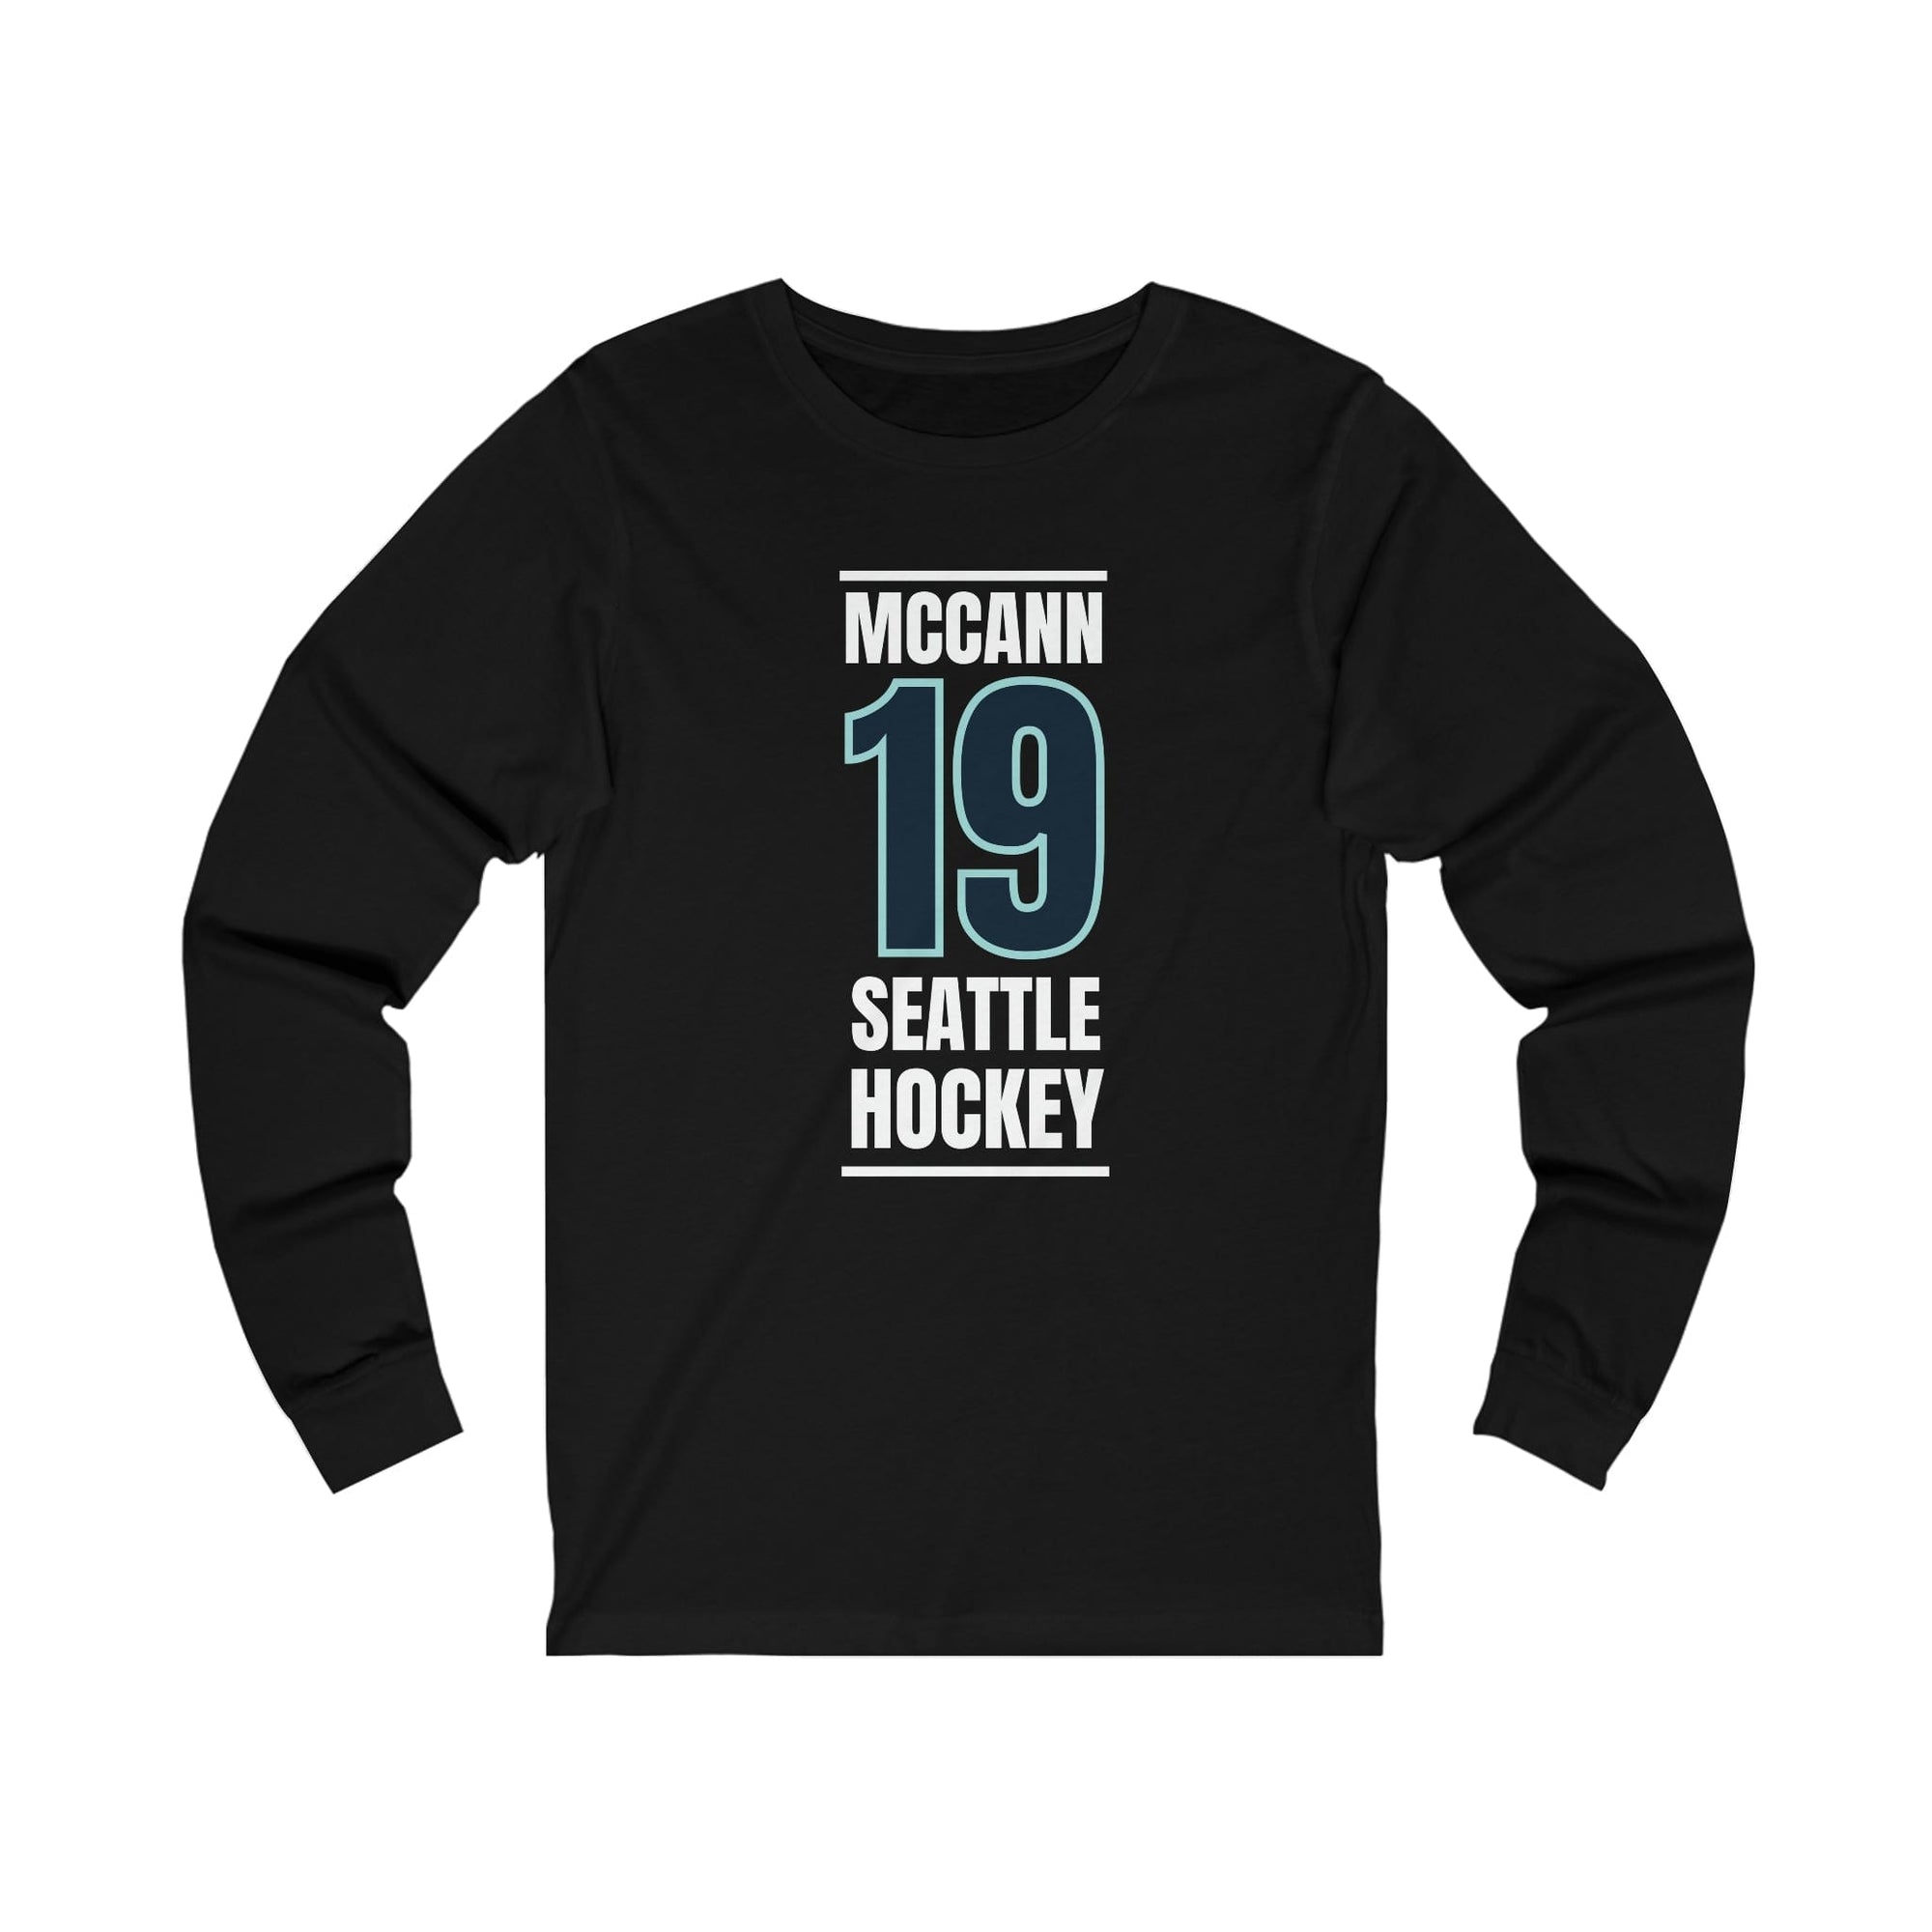 Long-sleeve McCann 19 Seattle Hockey Black Vertical Design Unisex Jersey Long Sleeve Shirt